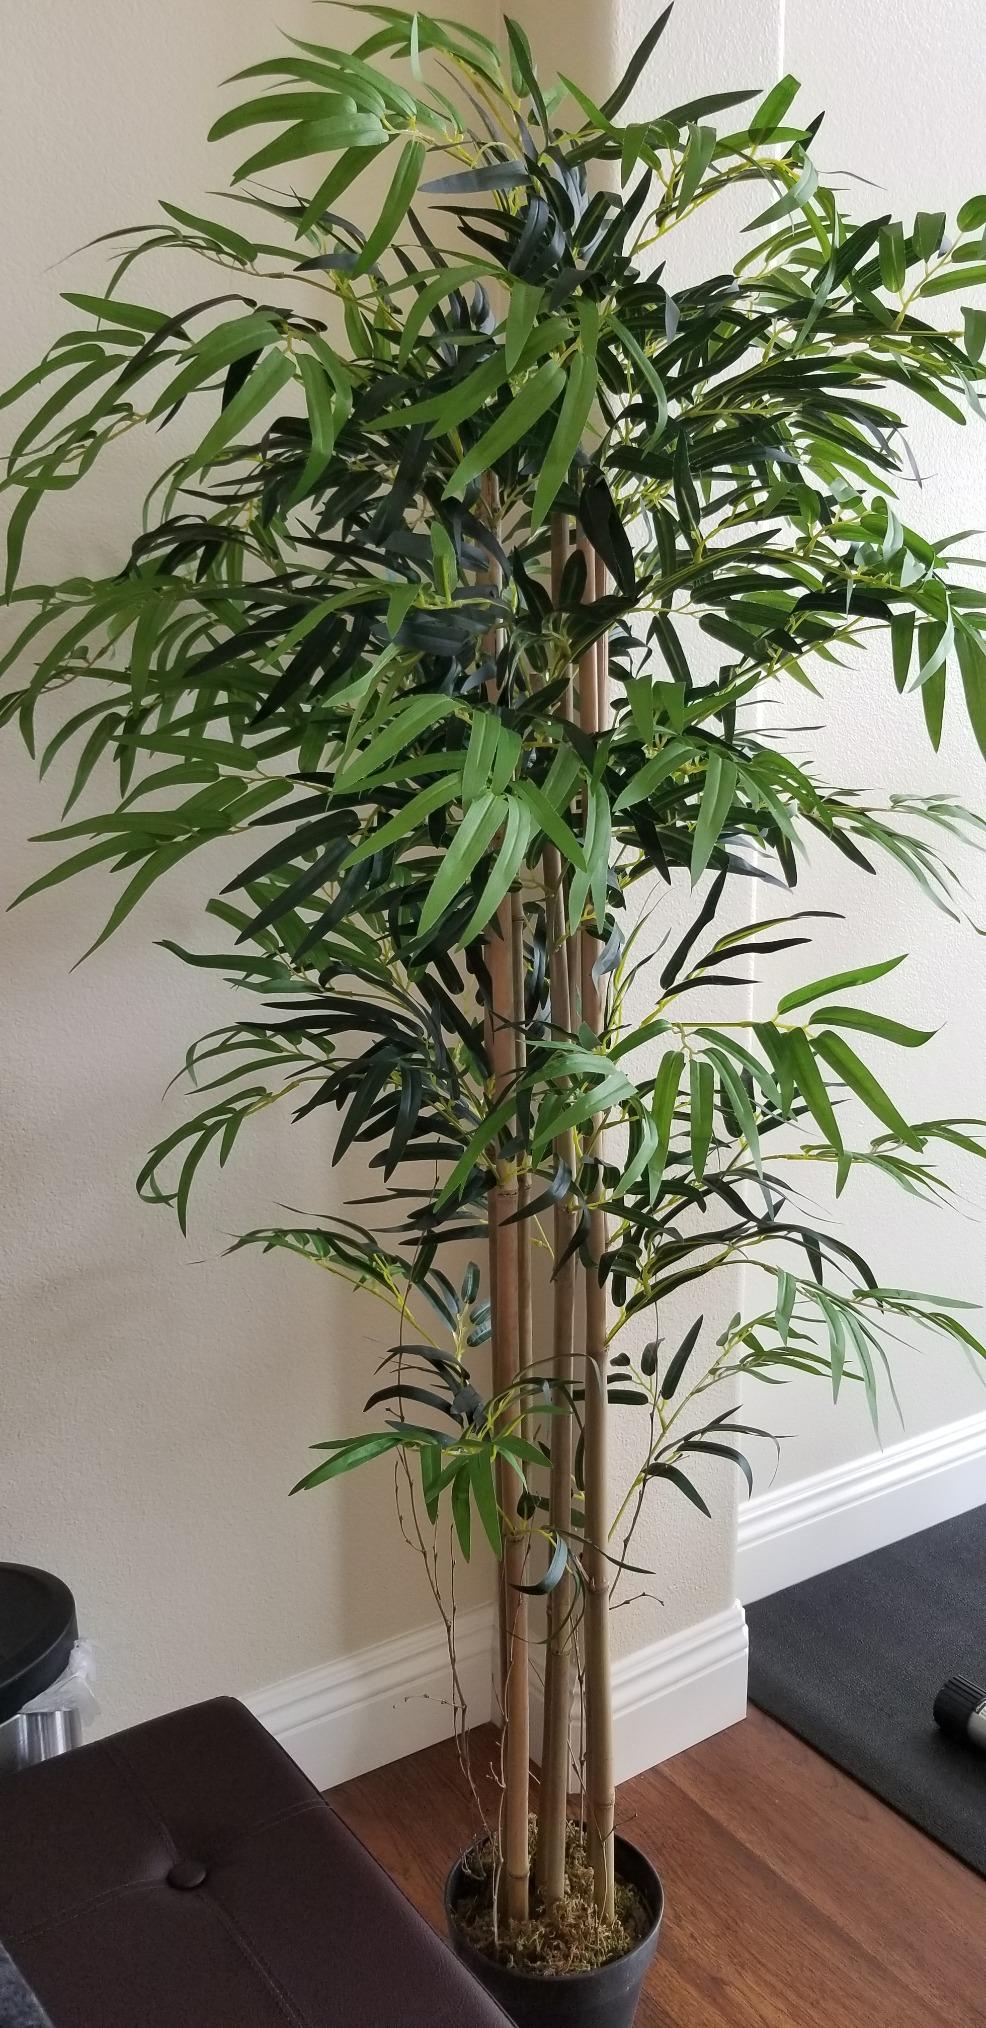 5-Feet Artificial Bamboo Silk Tree Indoor-Outdoor Decorative Planter -  Costway